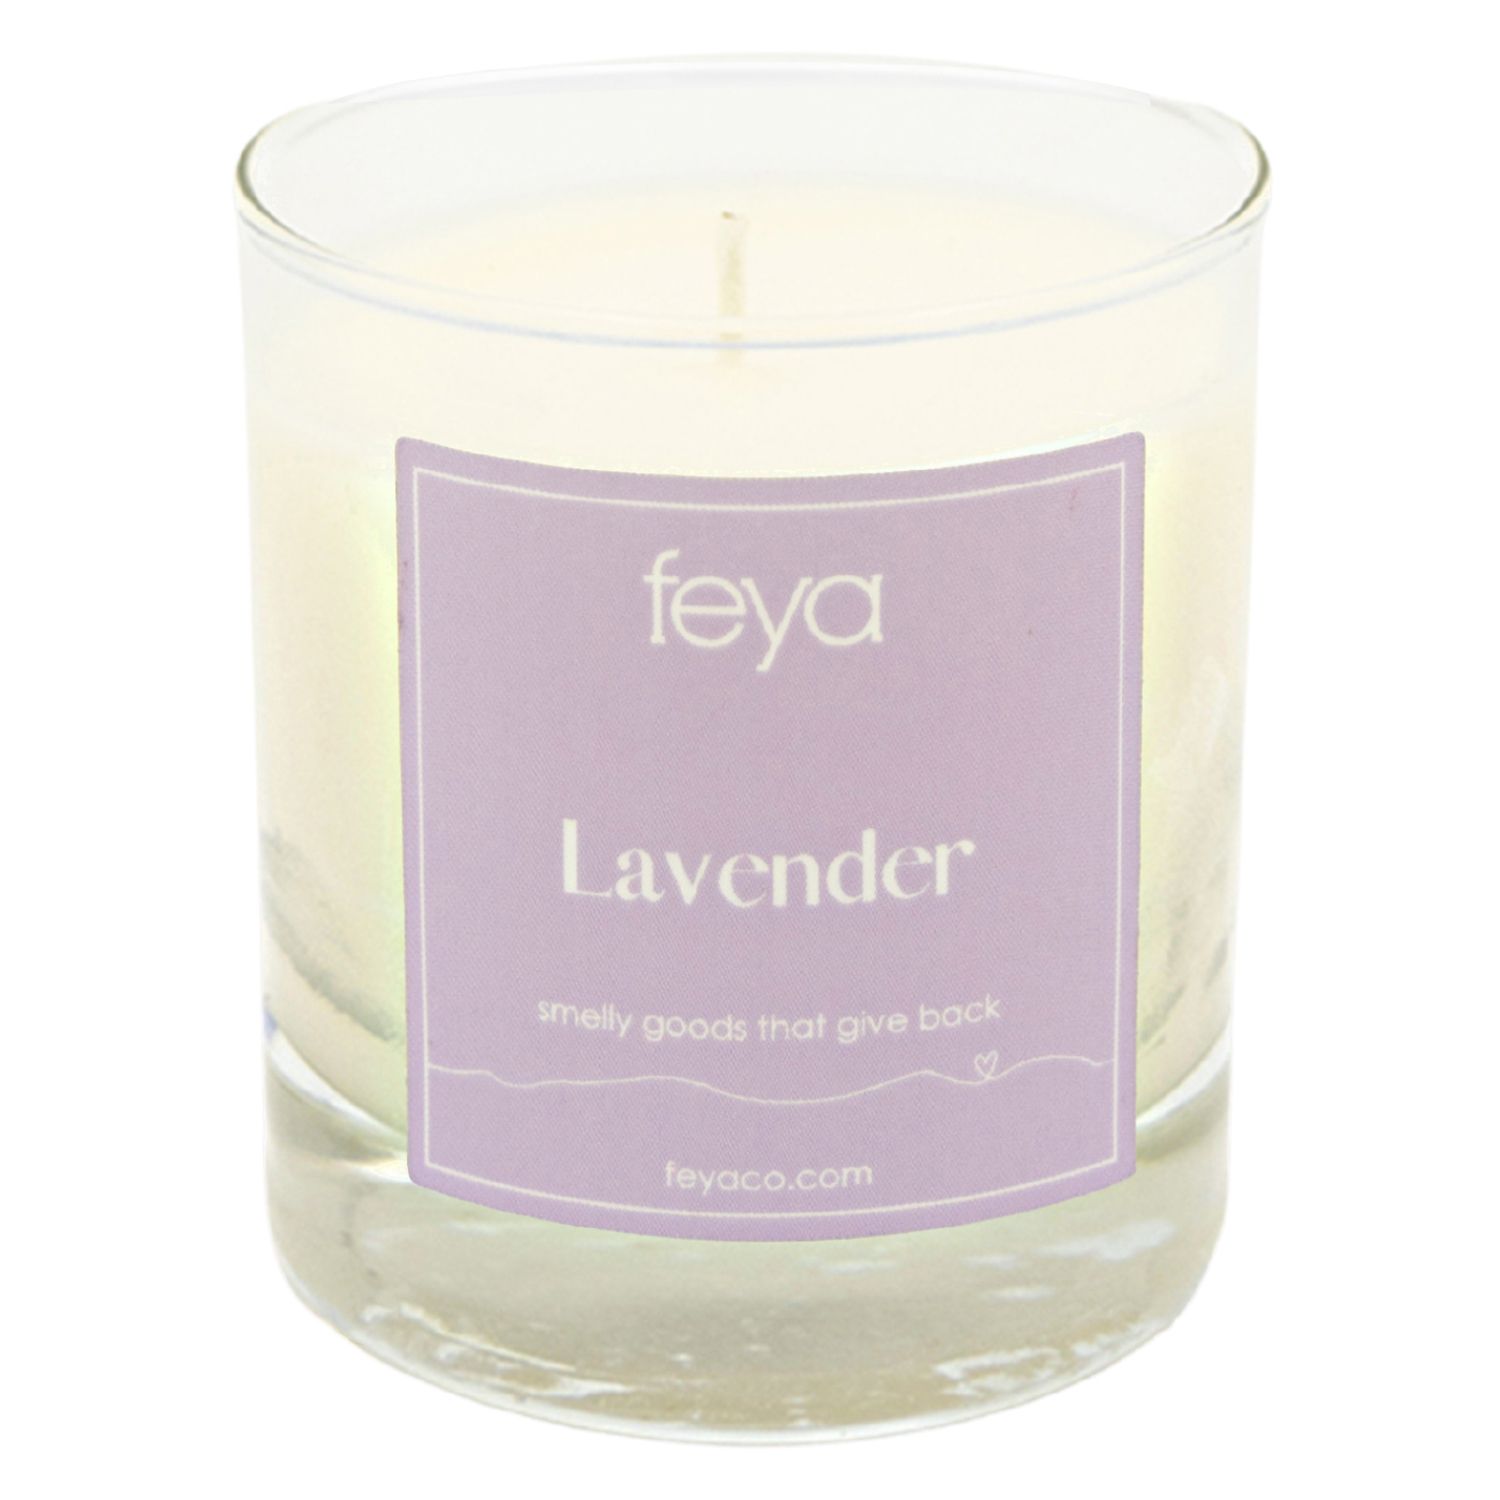 Свечи Feya Lavender, 6,5 унций. Соевая восковая свеча свечи feya lavender 6 5 унций соевая восковая свеча